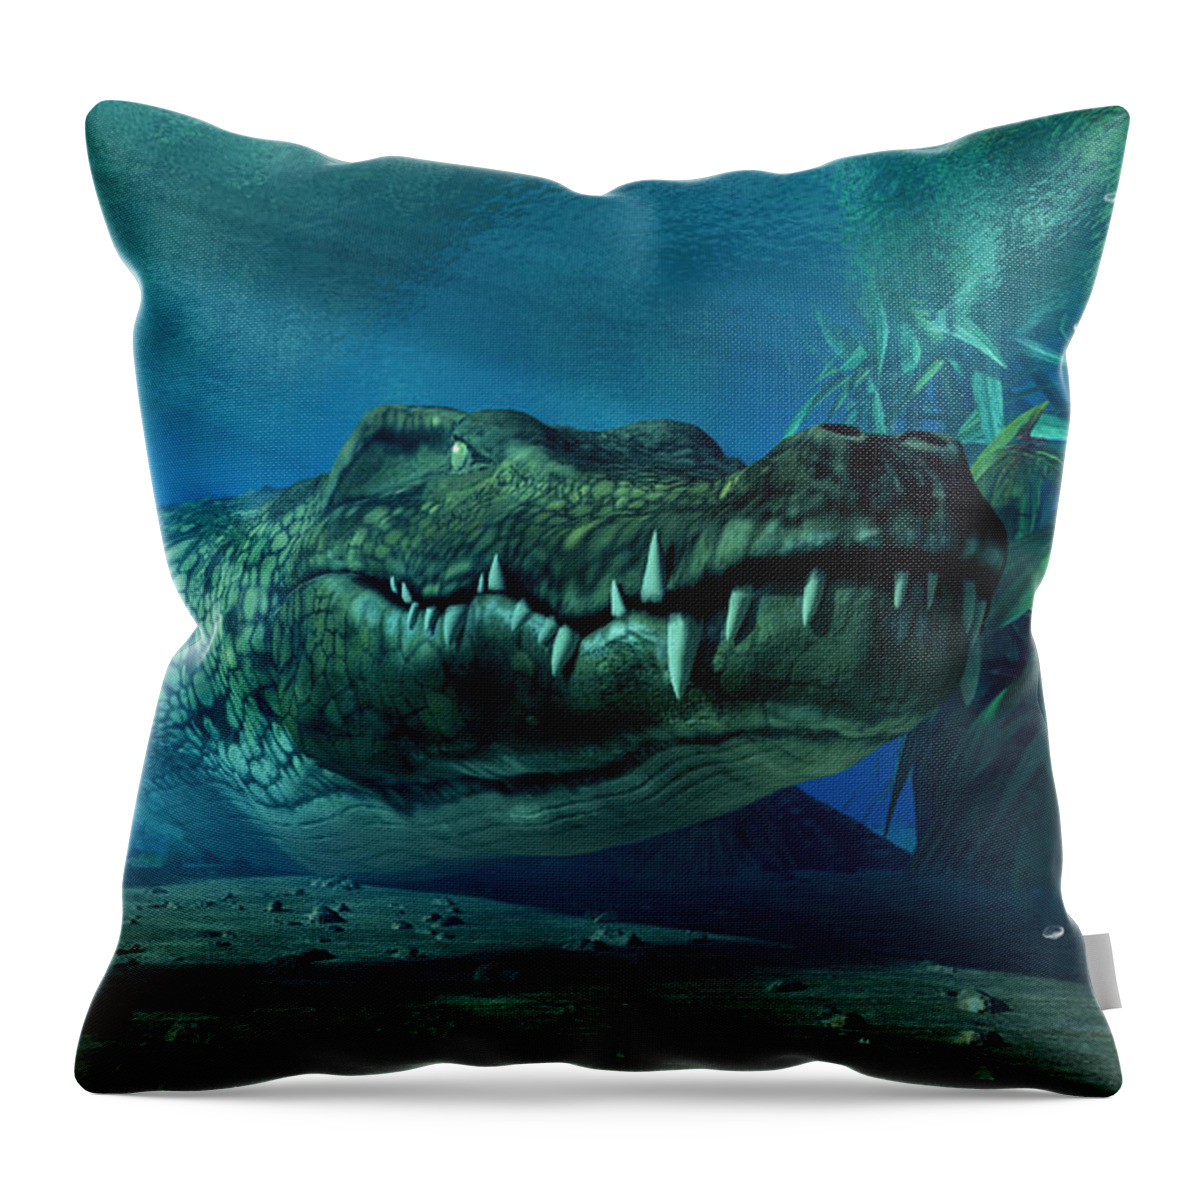 Crocodile Throw Pillow featuring the digital art Crocodile by Daniel Eskridge